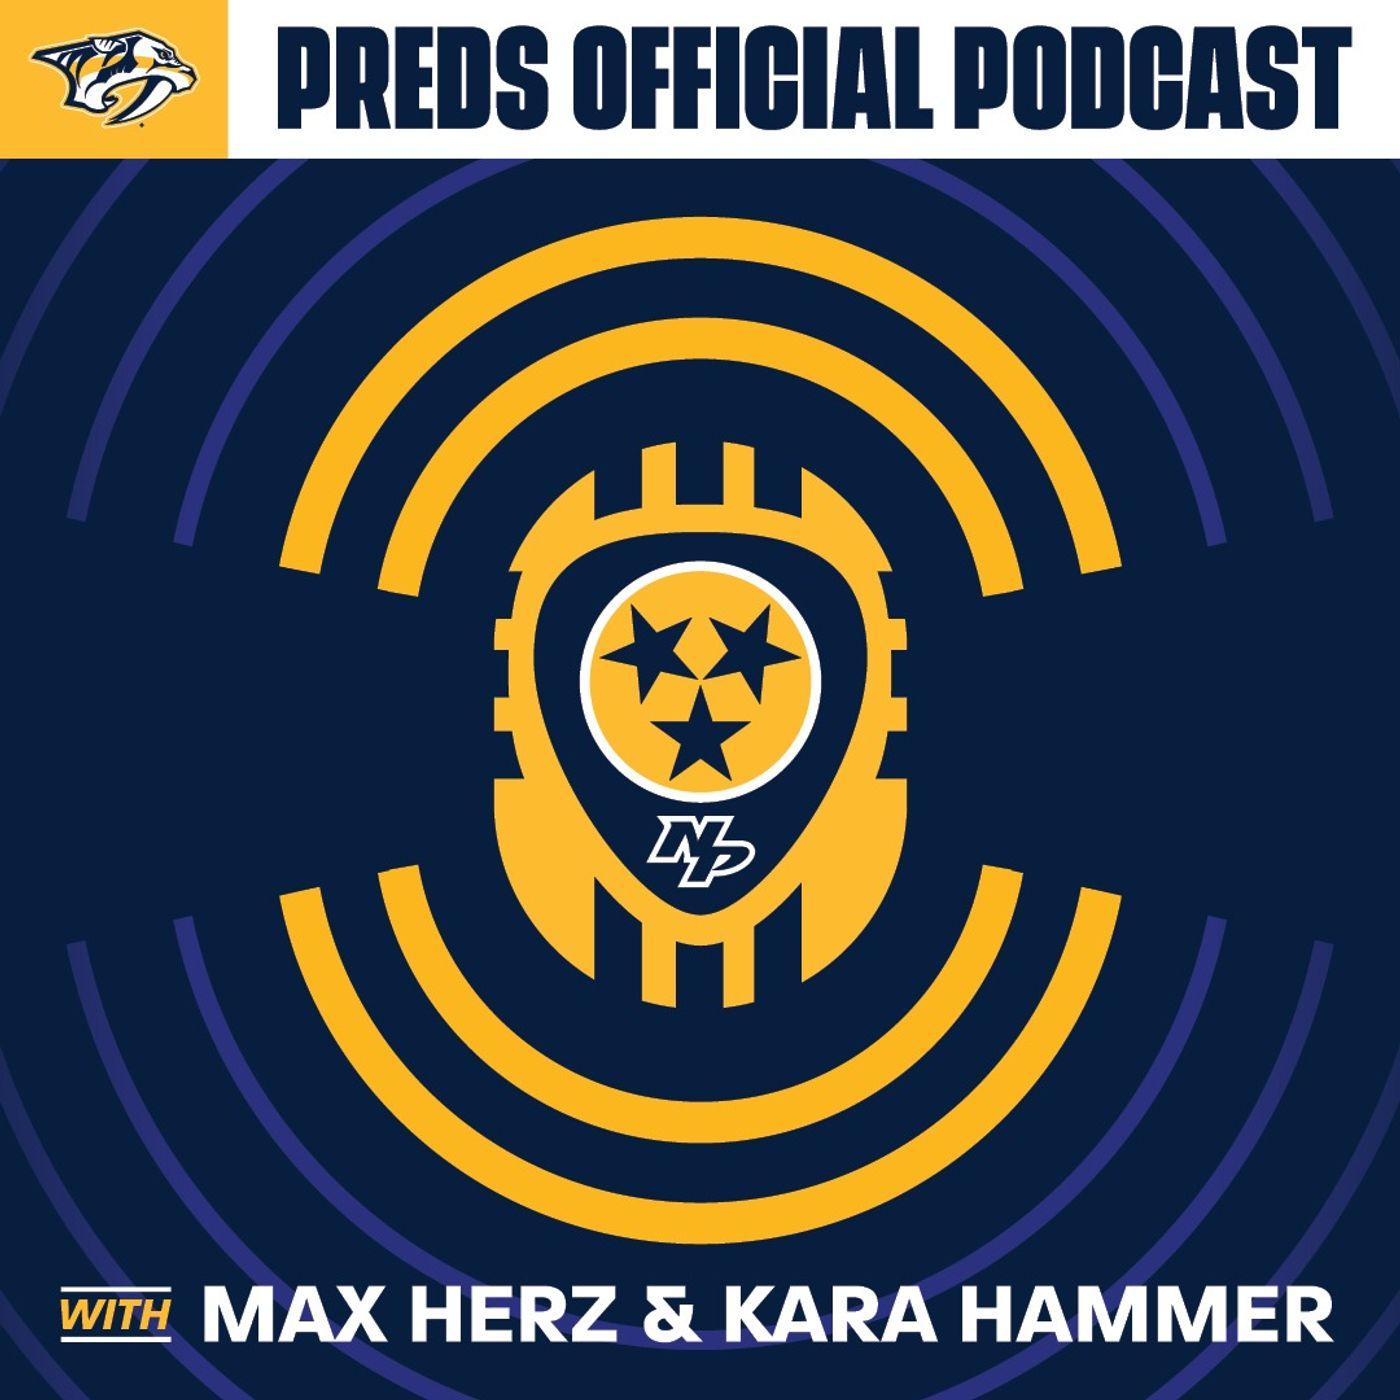 Predators Official Podcast